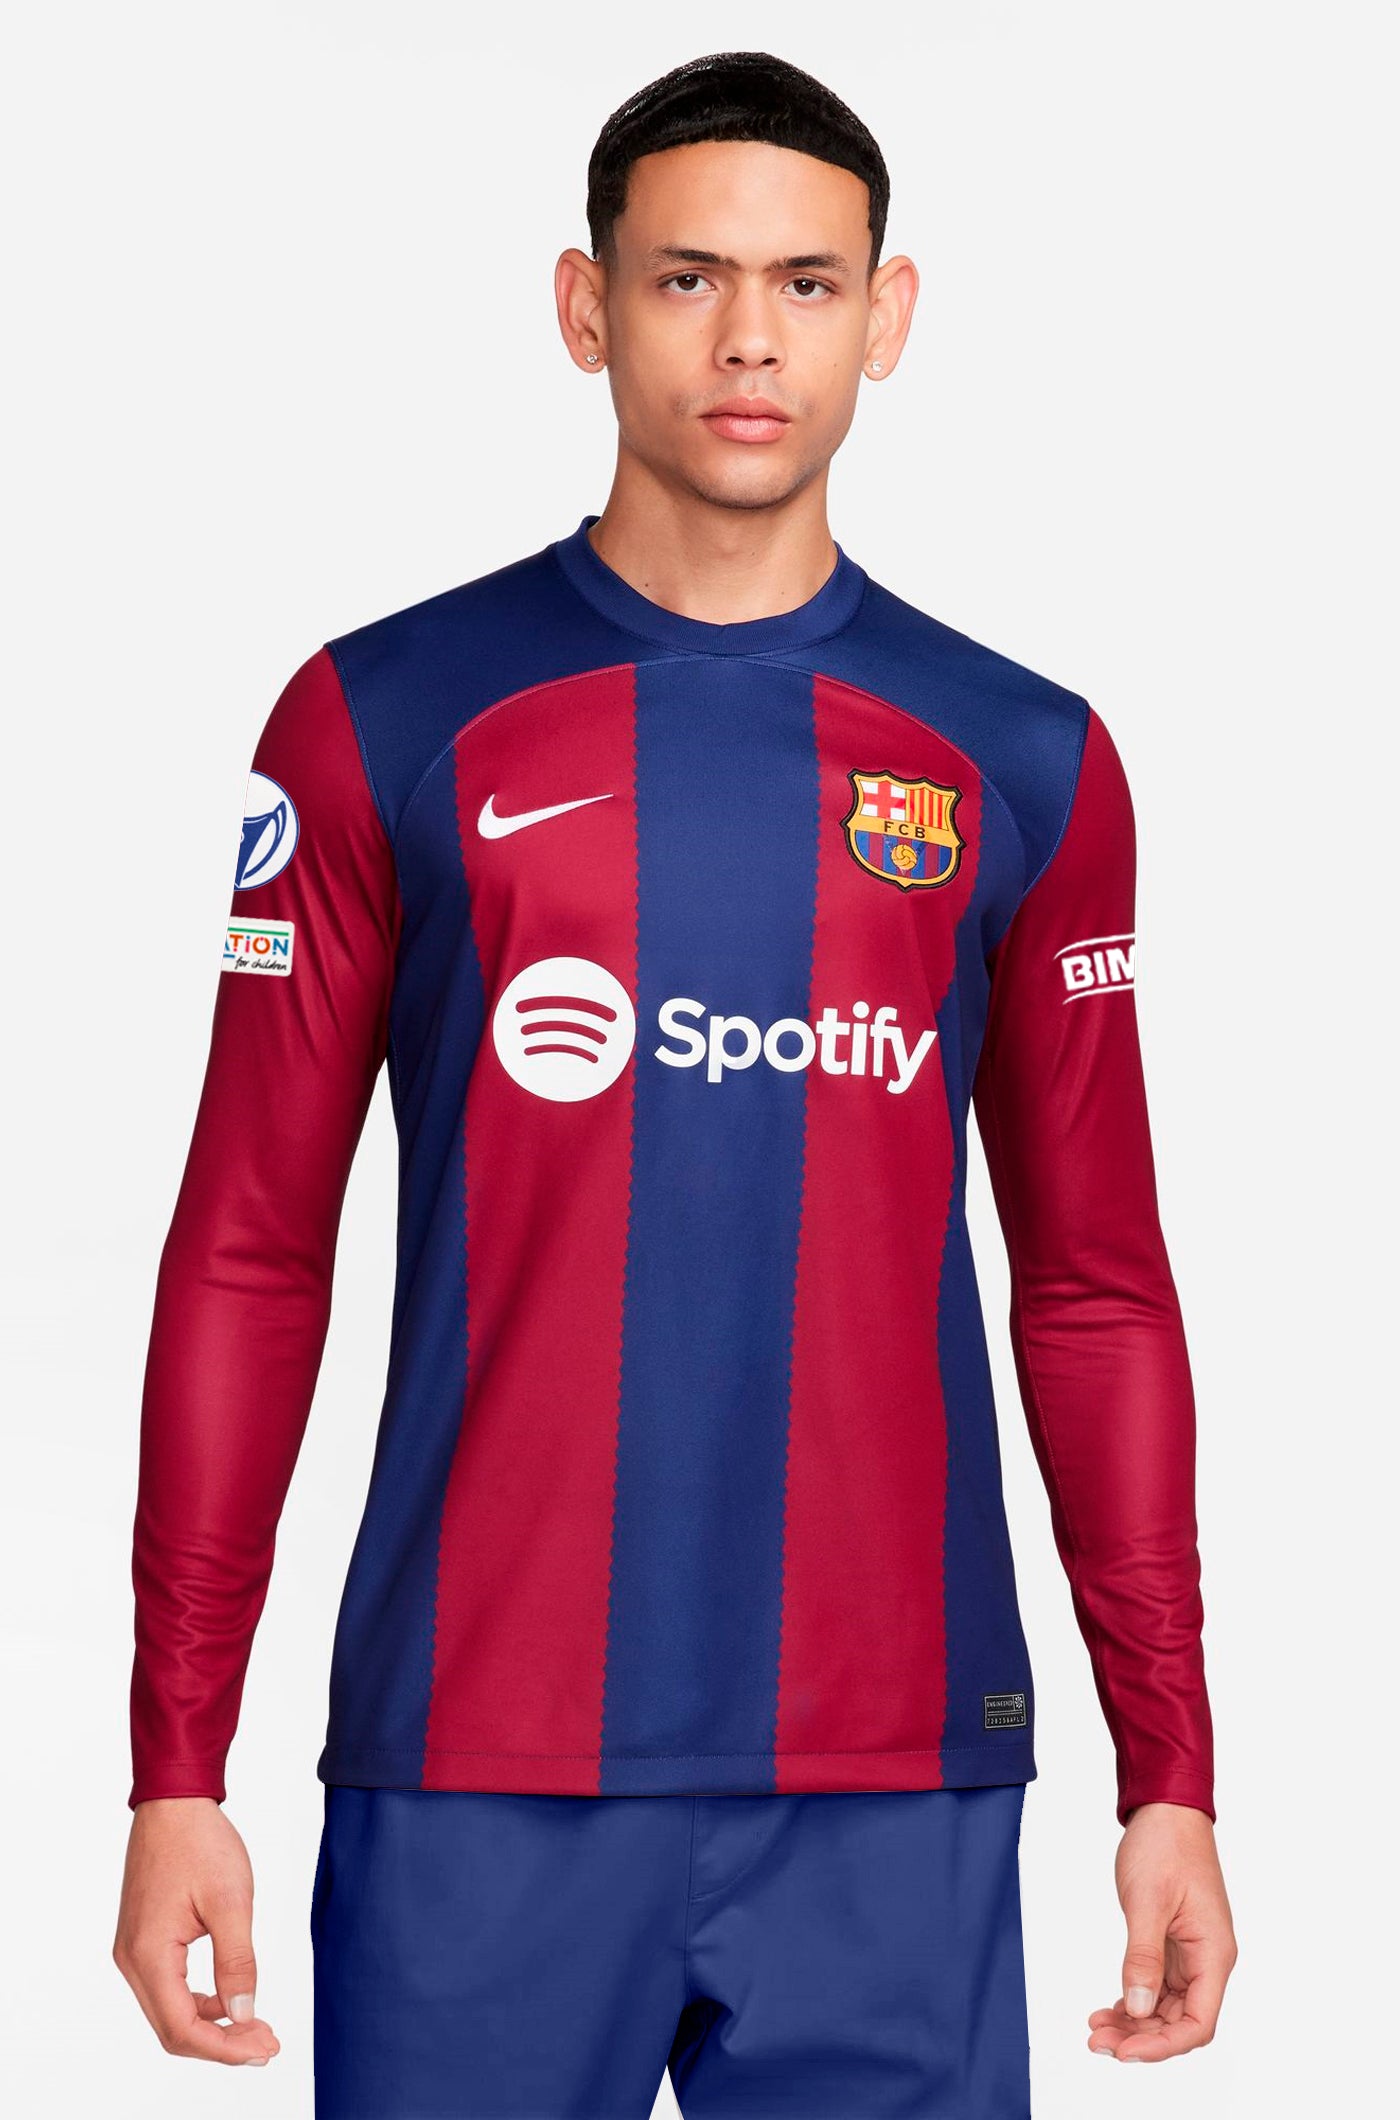 UWCL FC Barcelona home shirt 23/24 - Long-sleeve - ALEXIA